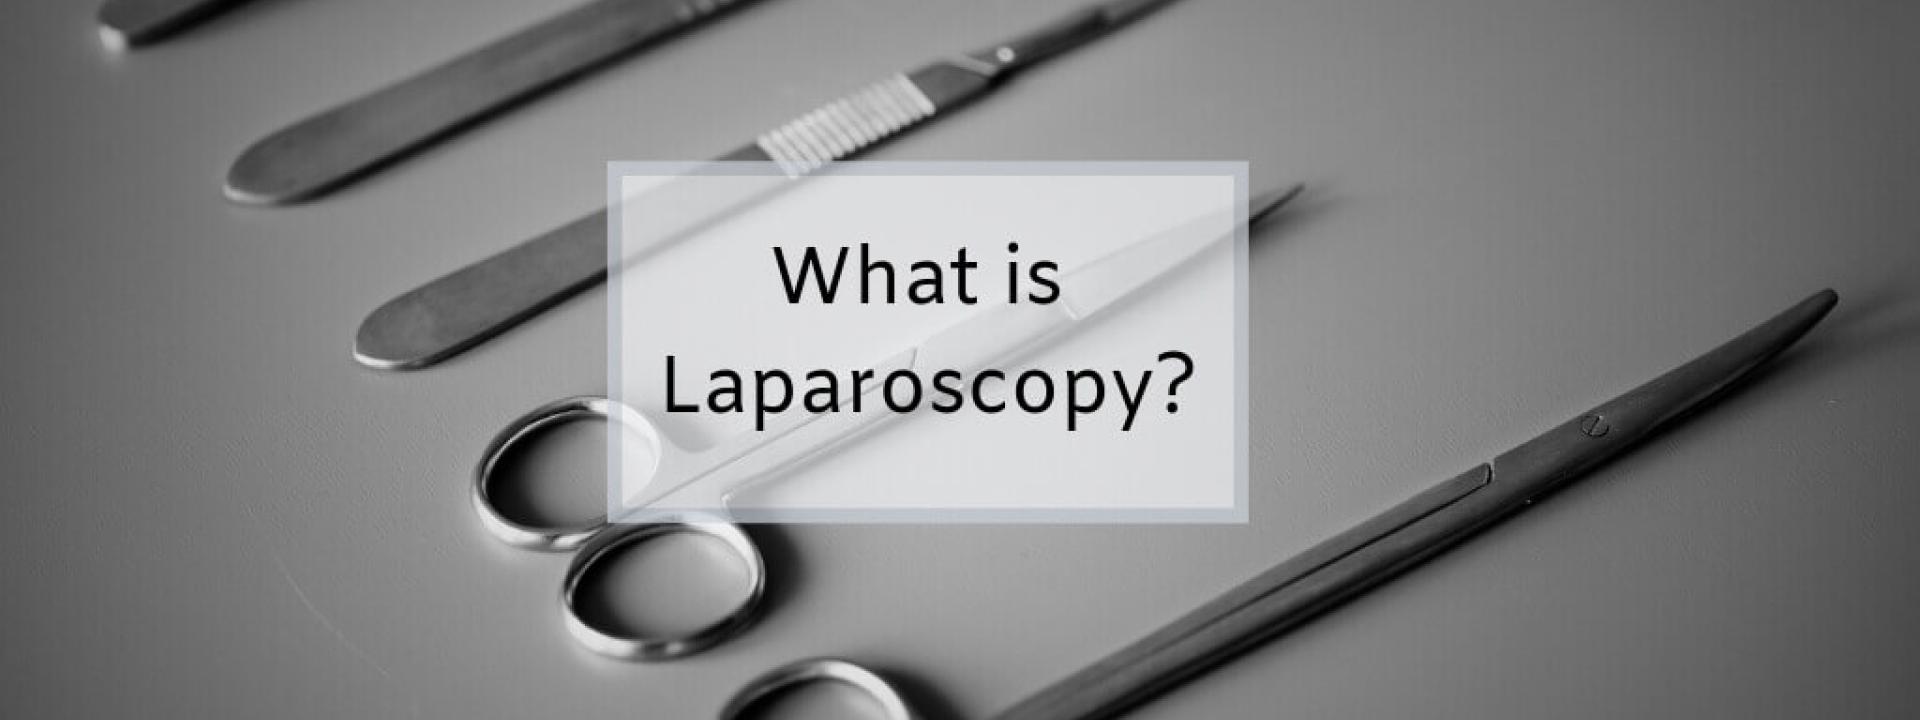 laparoscopy-blog-header.jpg